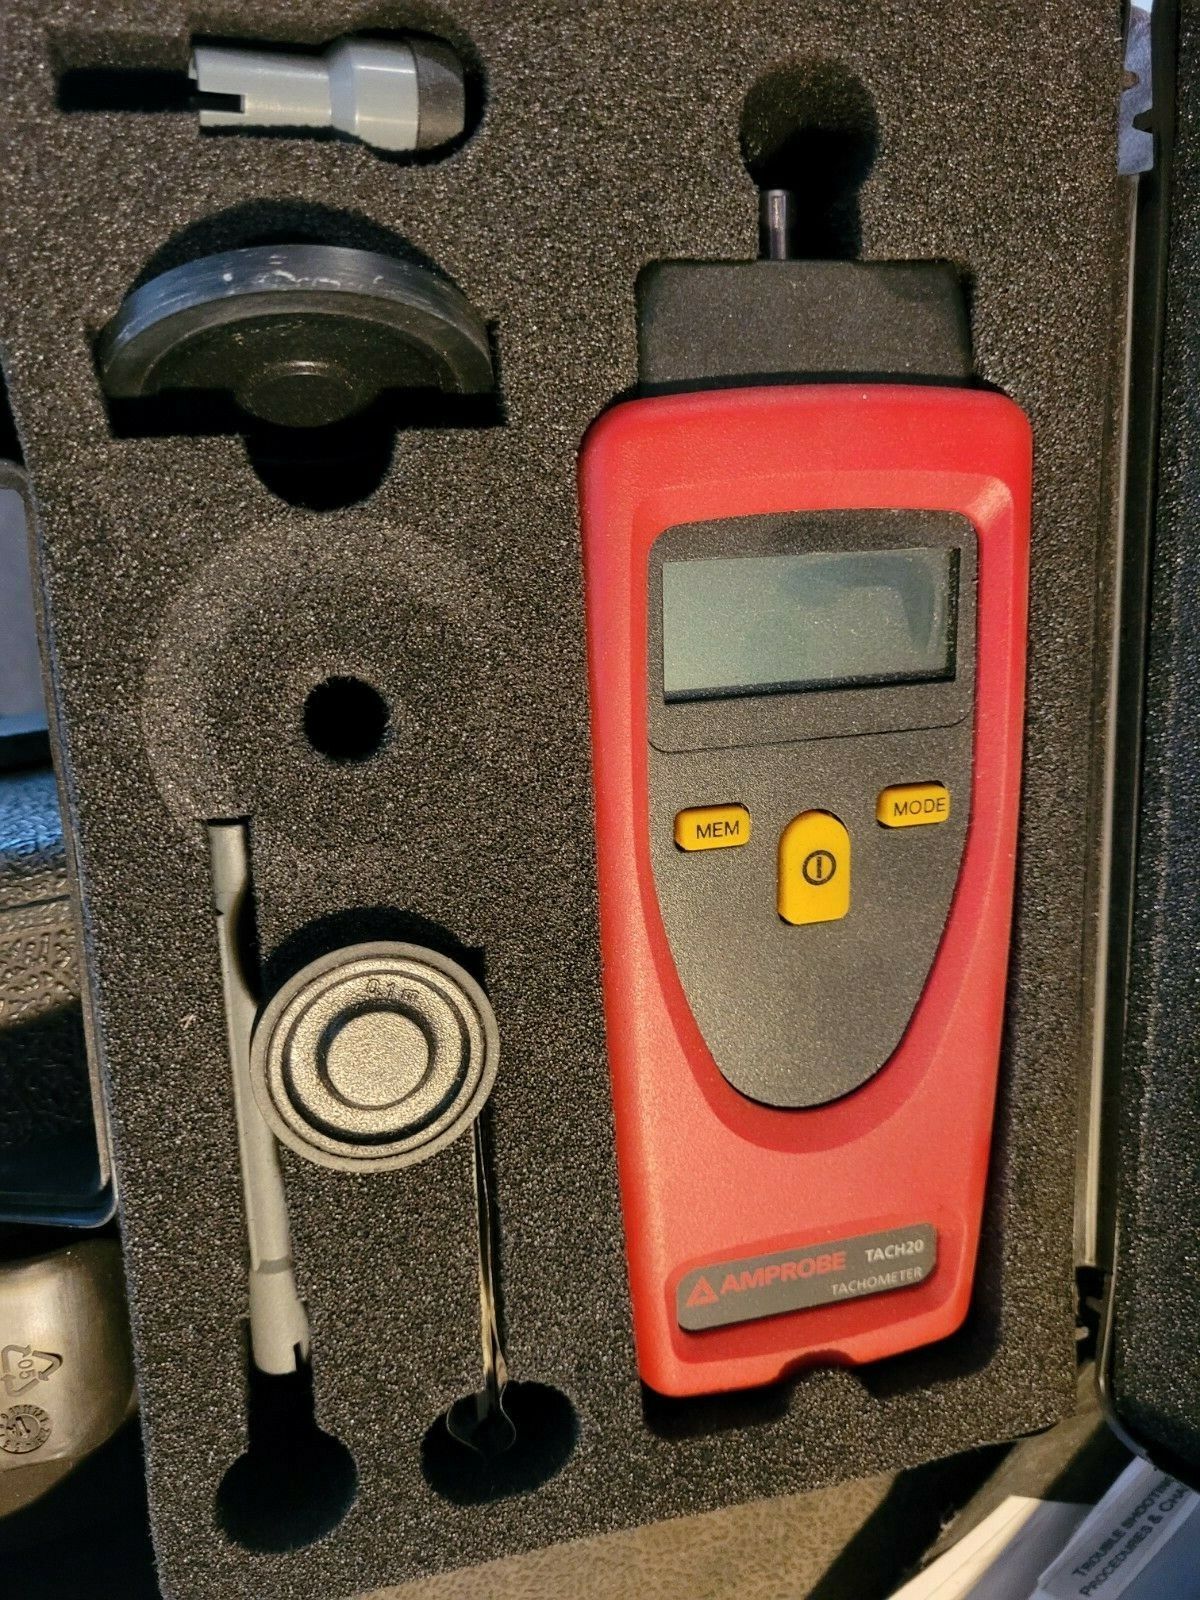 Amprobe Tach20 Digital Handheld Tachometer w/ case and user manual